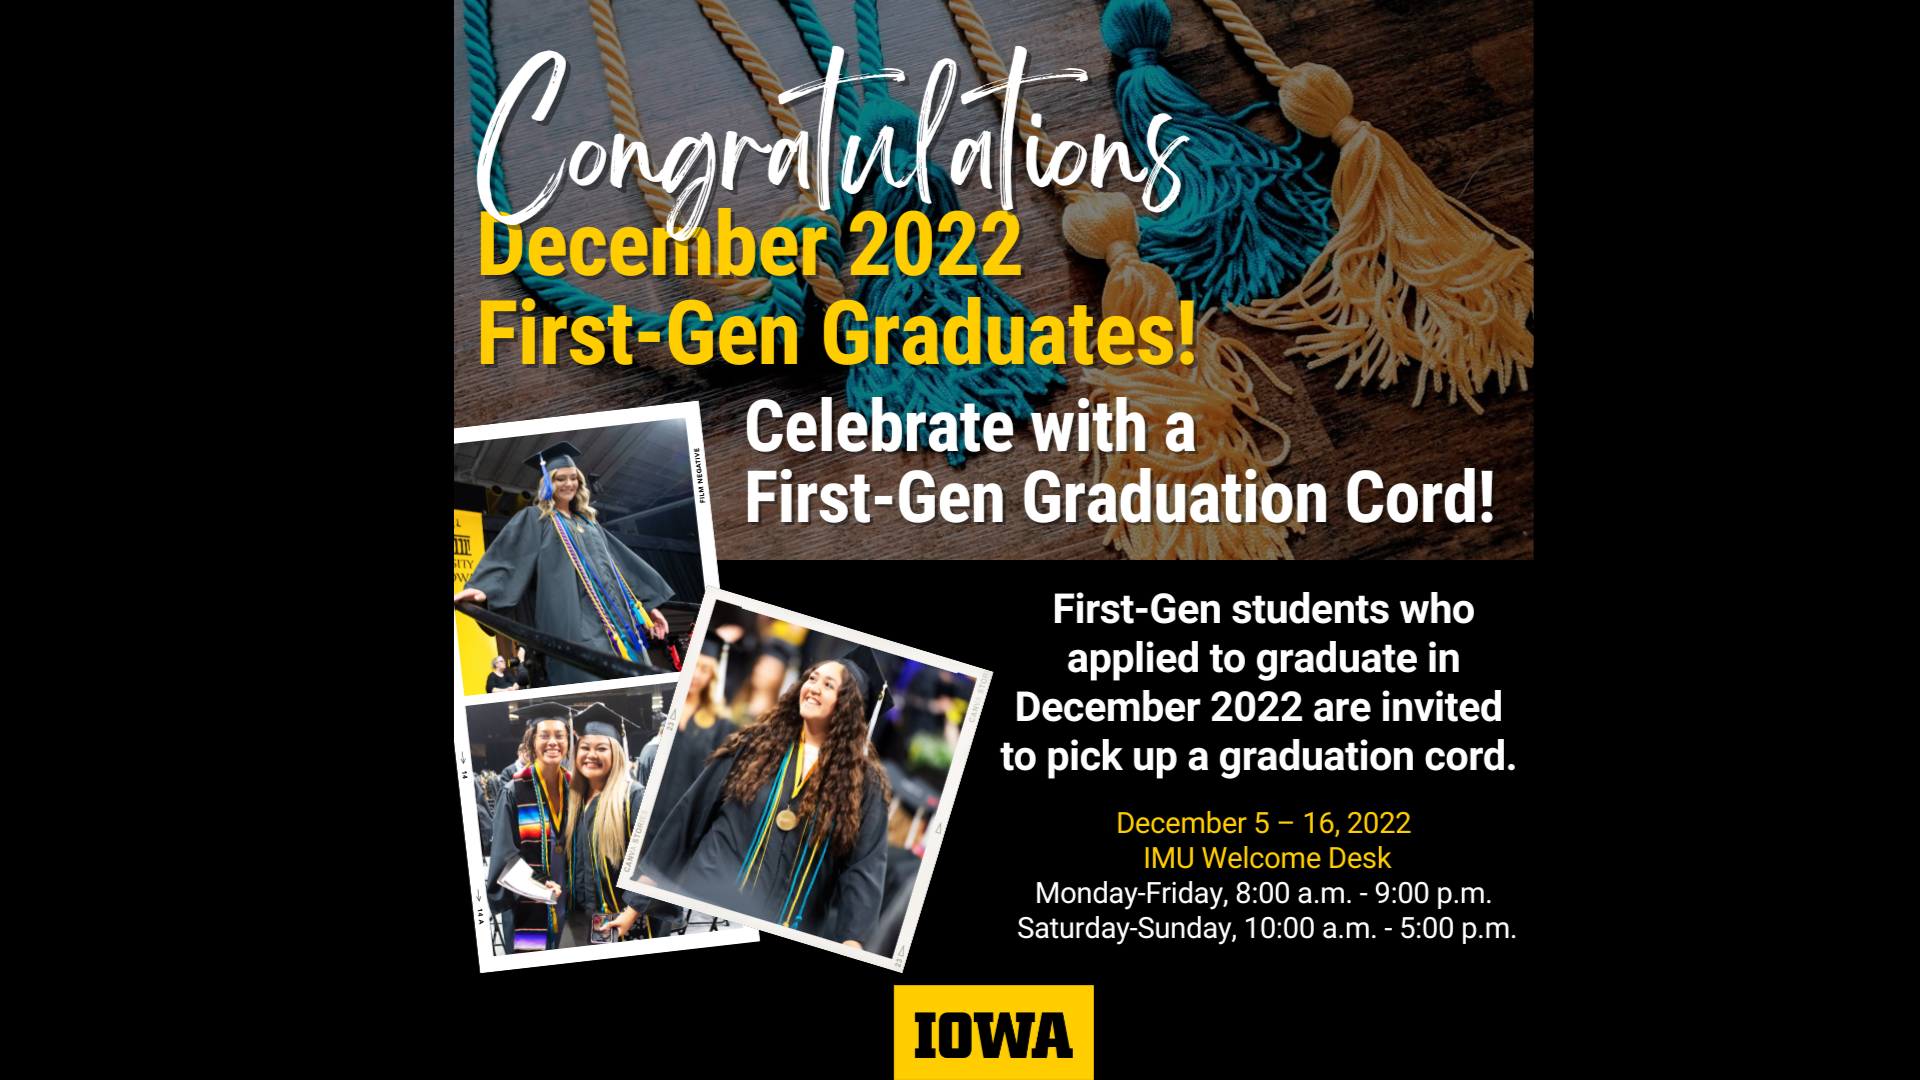 First Gen Graduation Cord Announcement Dec 5-16, IMU Welcome Desk